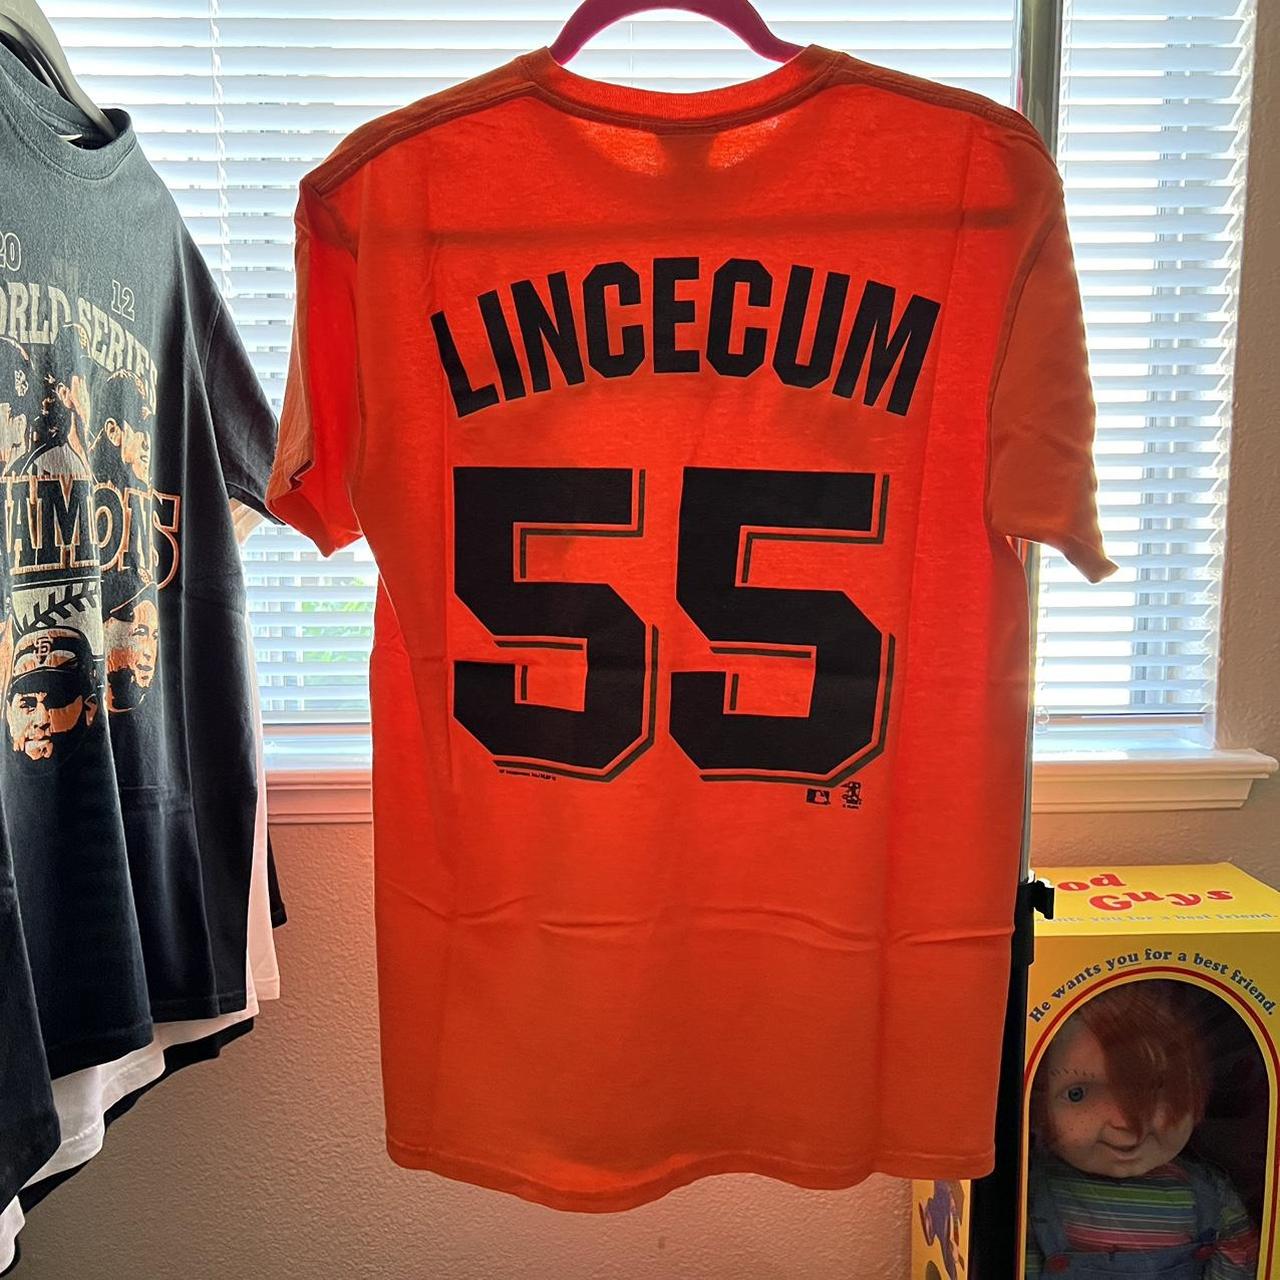 MLB Men's T-Shirt - Orange - M